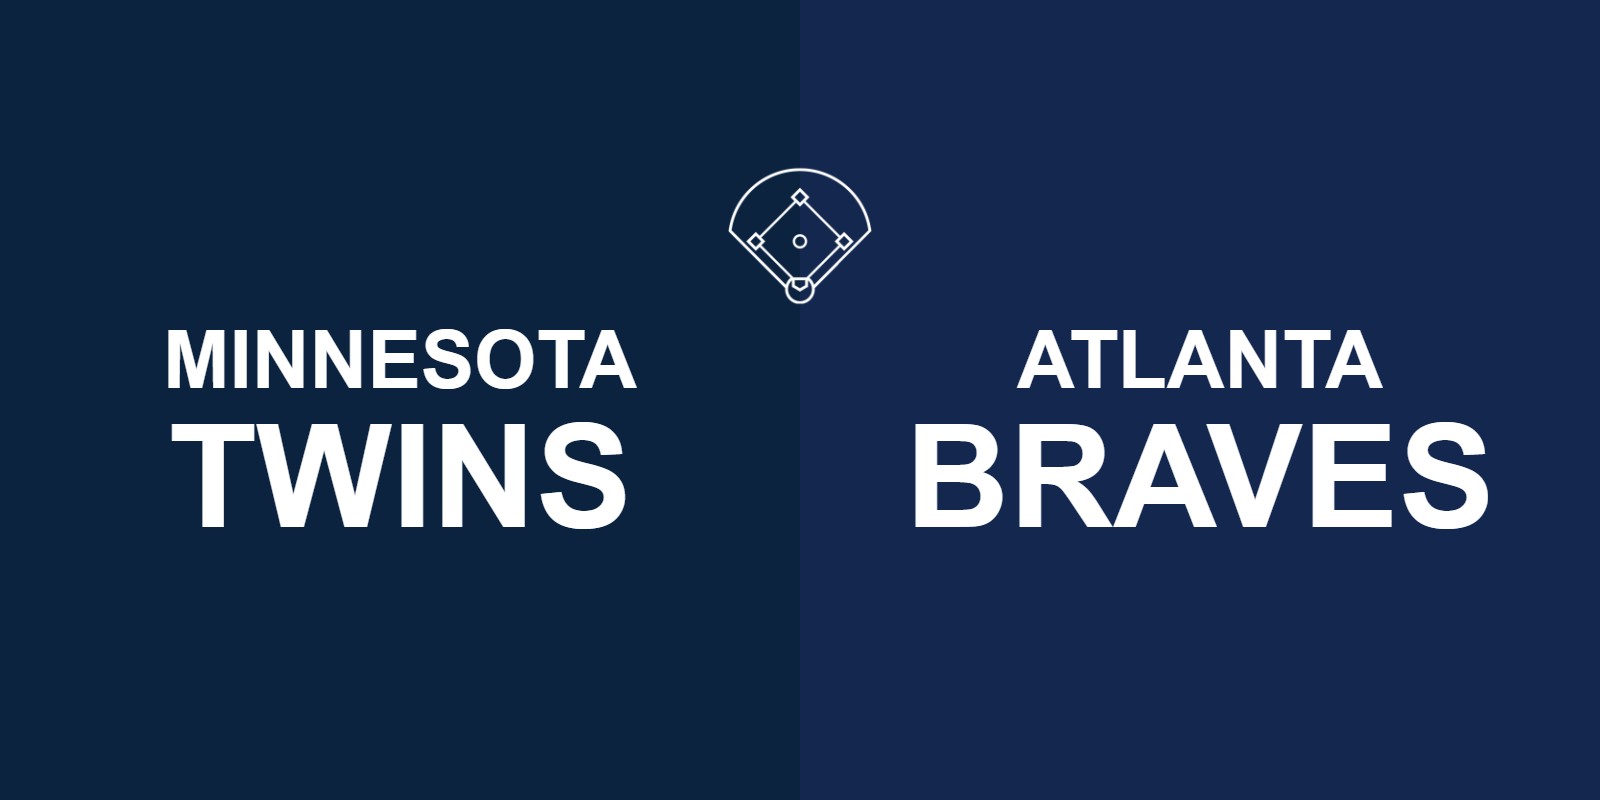 Twins vs Braves